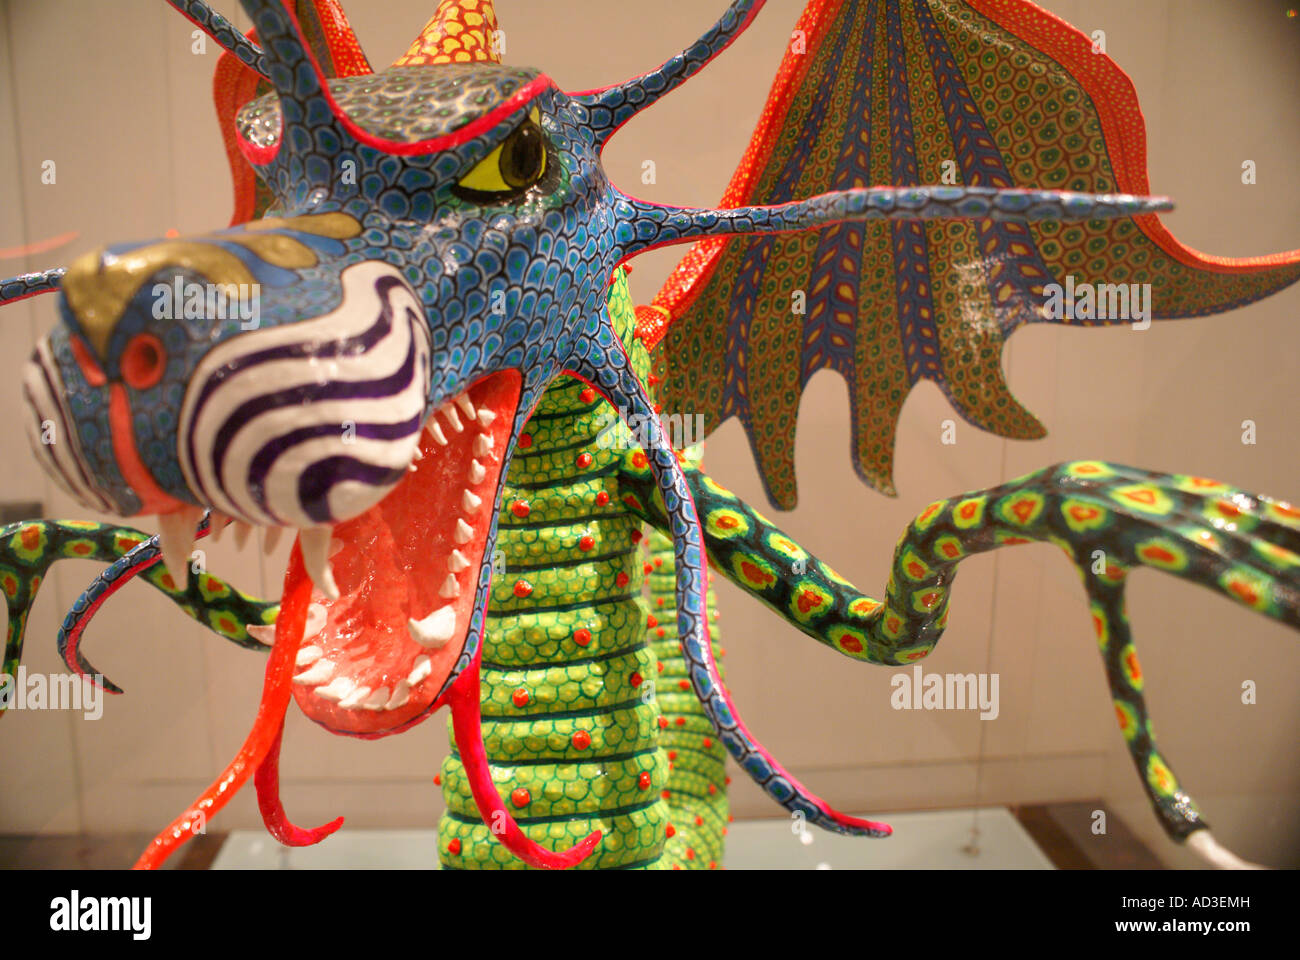 Papier mache dragon alebrije sculpture in the Museum of Popular Art, Mexico City. Stock Photo